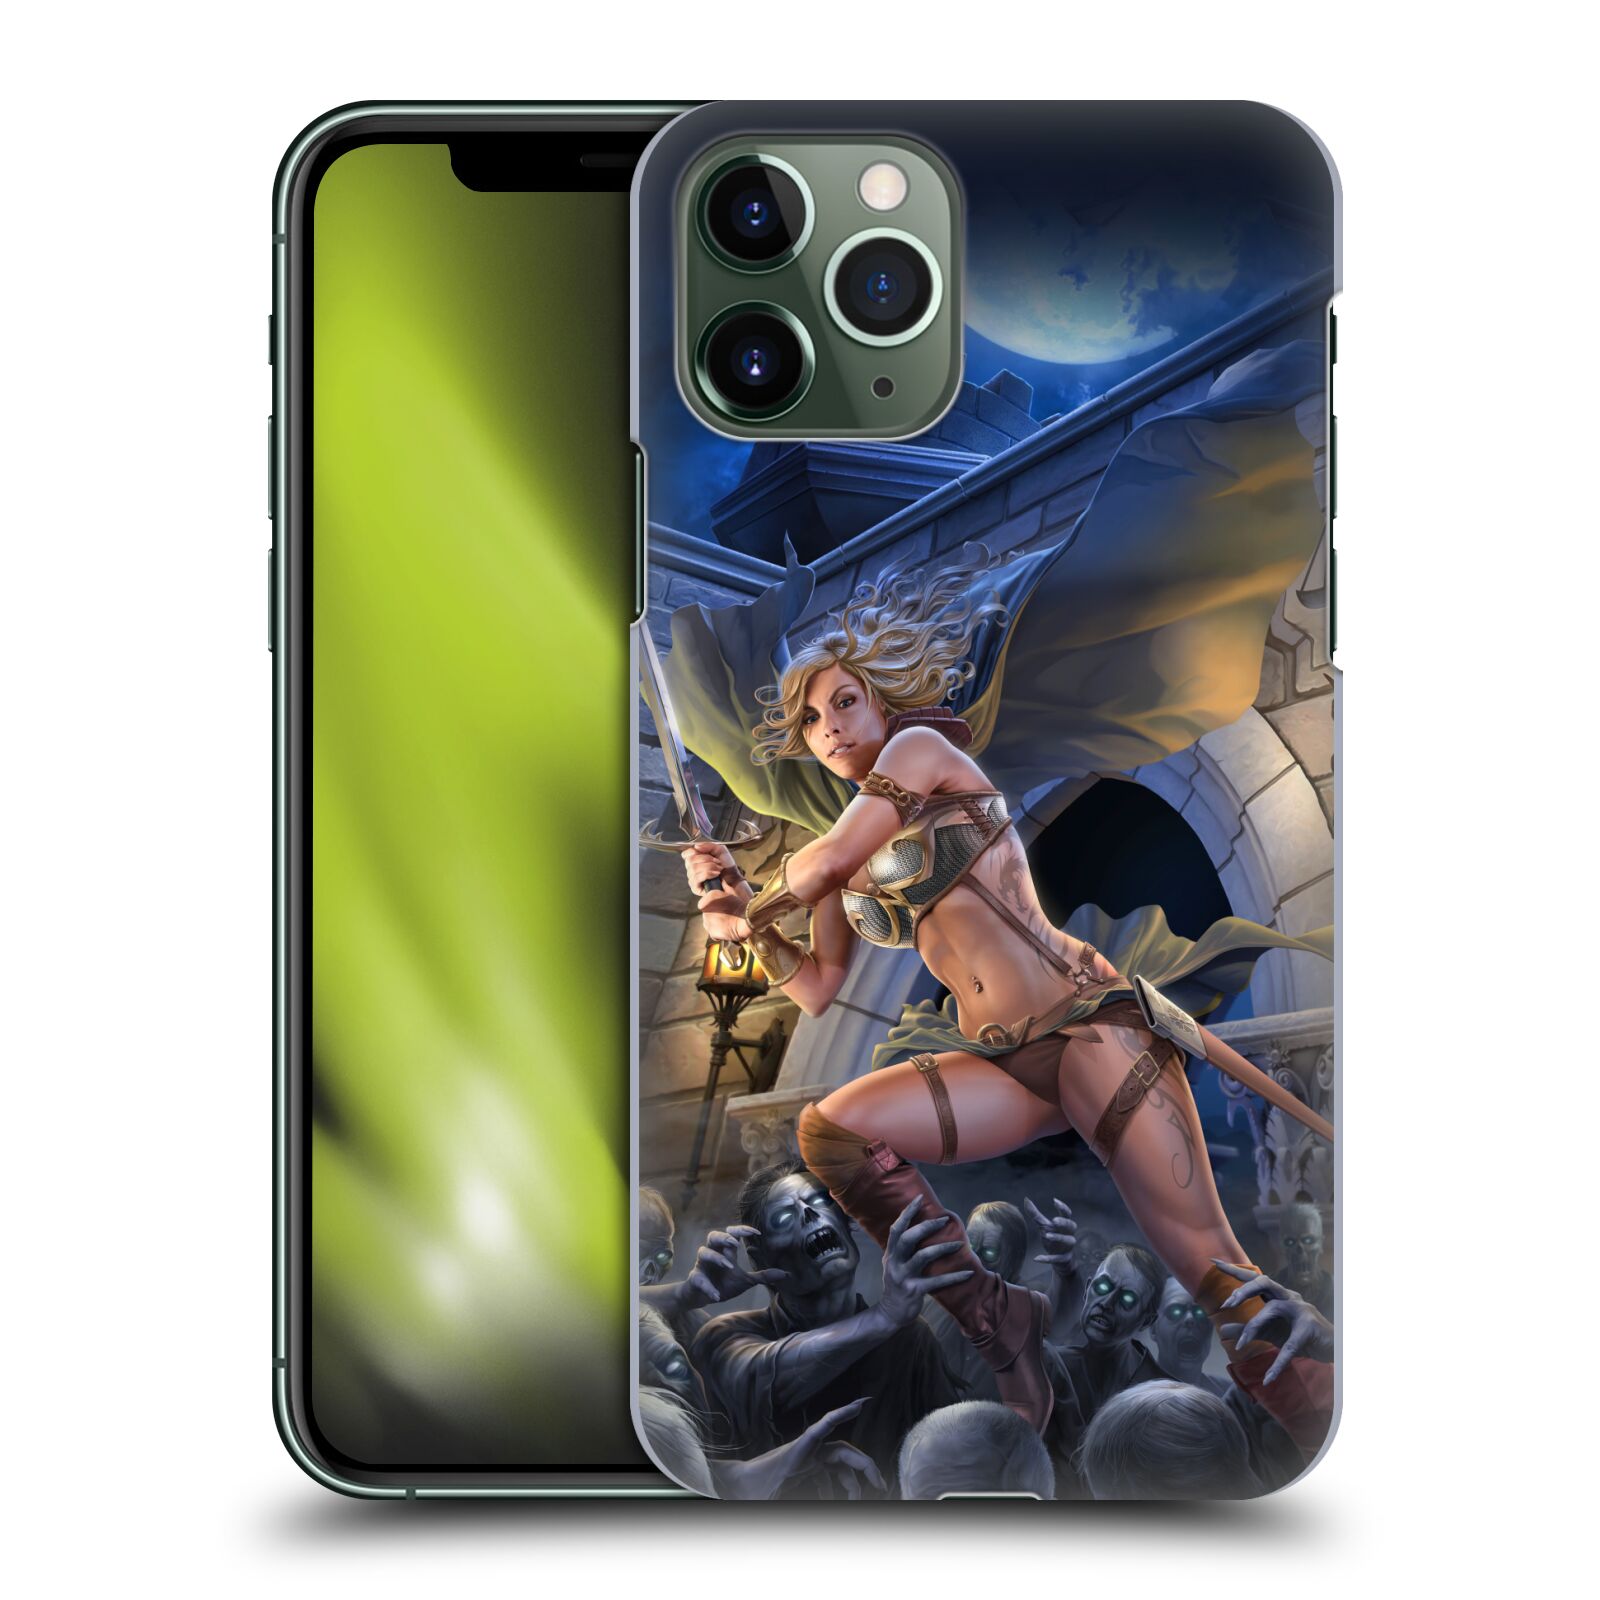 Pouzdro na mobil Apple Iphone 11 PRO - HEAD CASE - Fantasy kresby Tom Wood - Princezna bojovnice a zombies